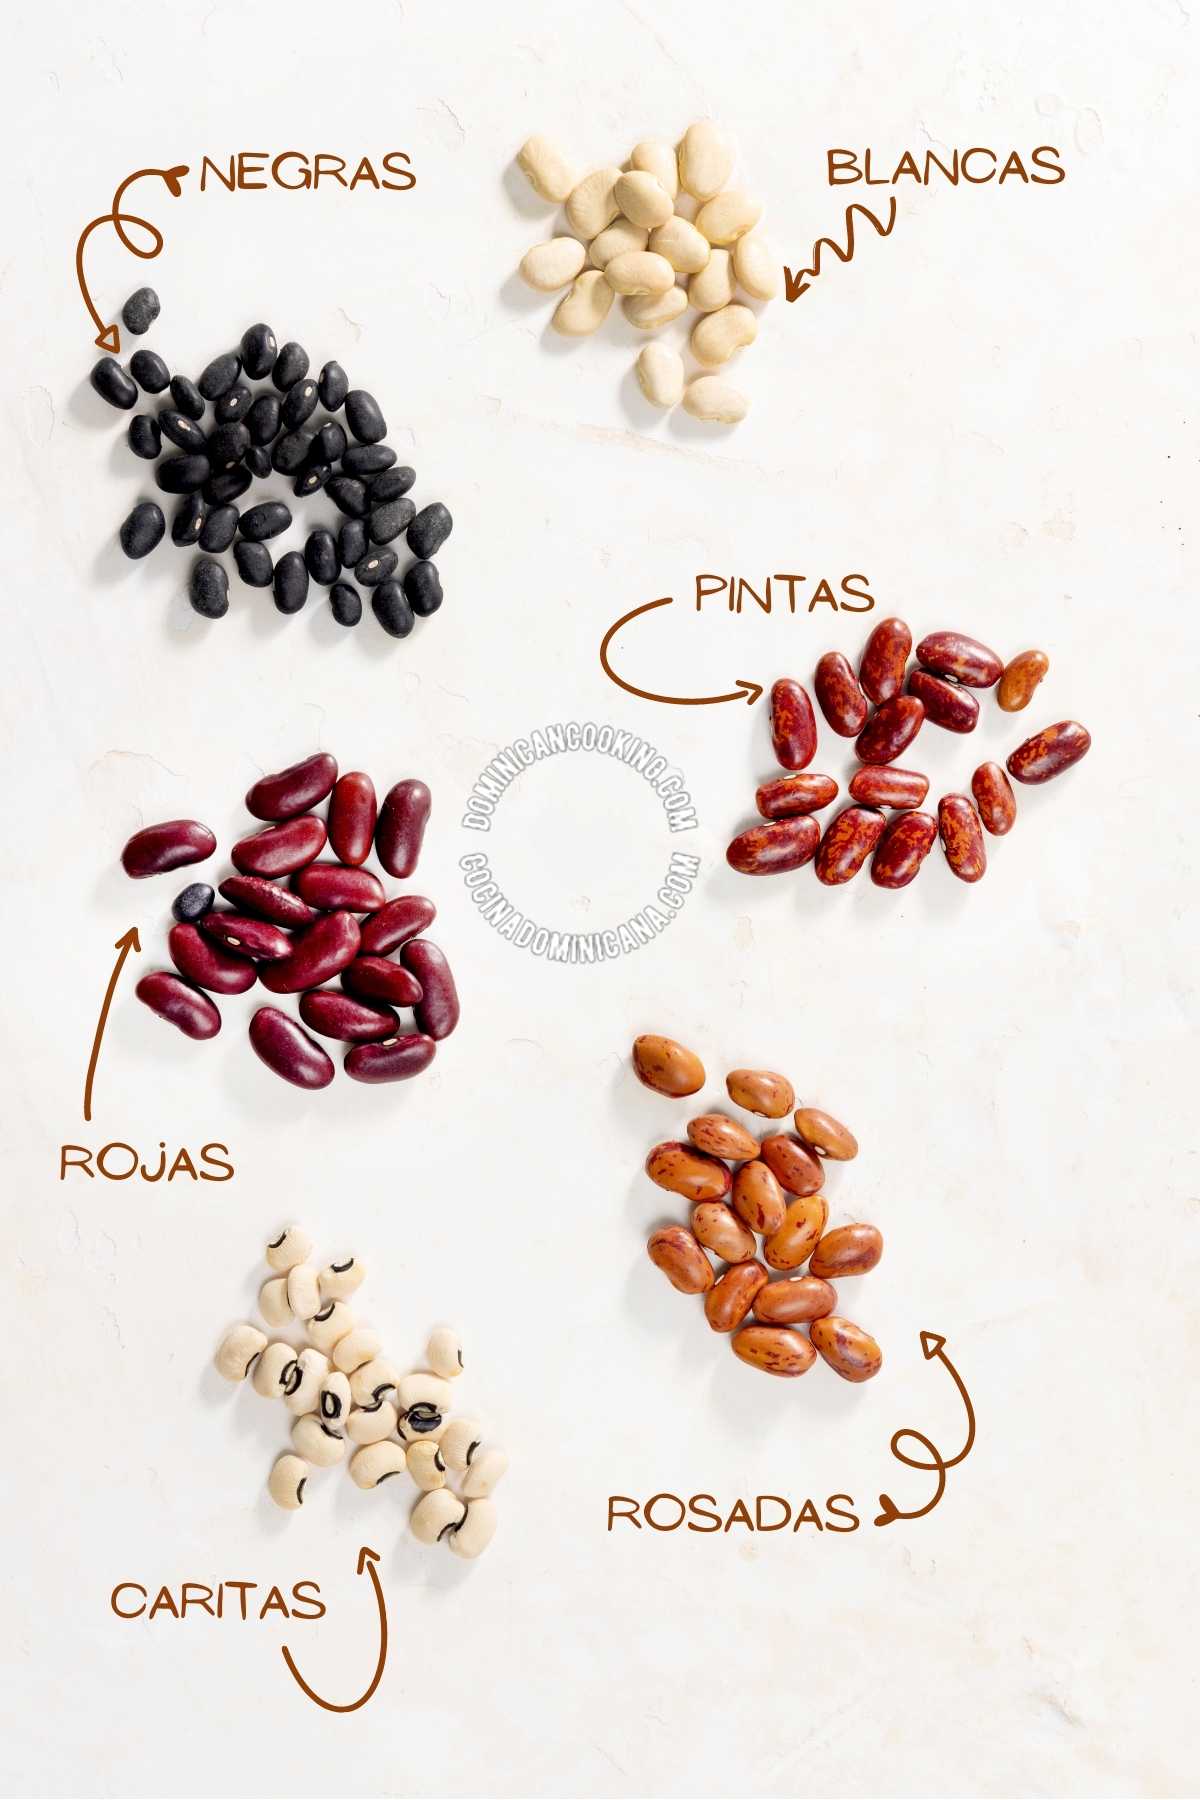 6 types of habichuelas (beans)